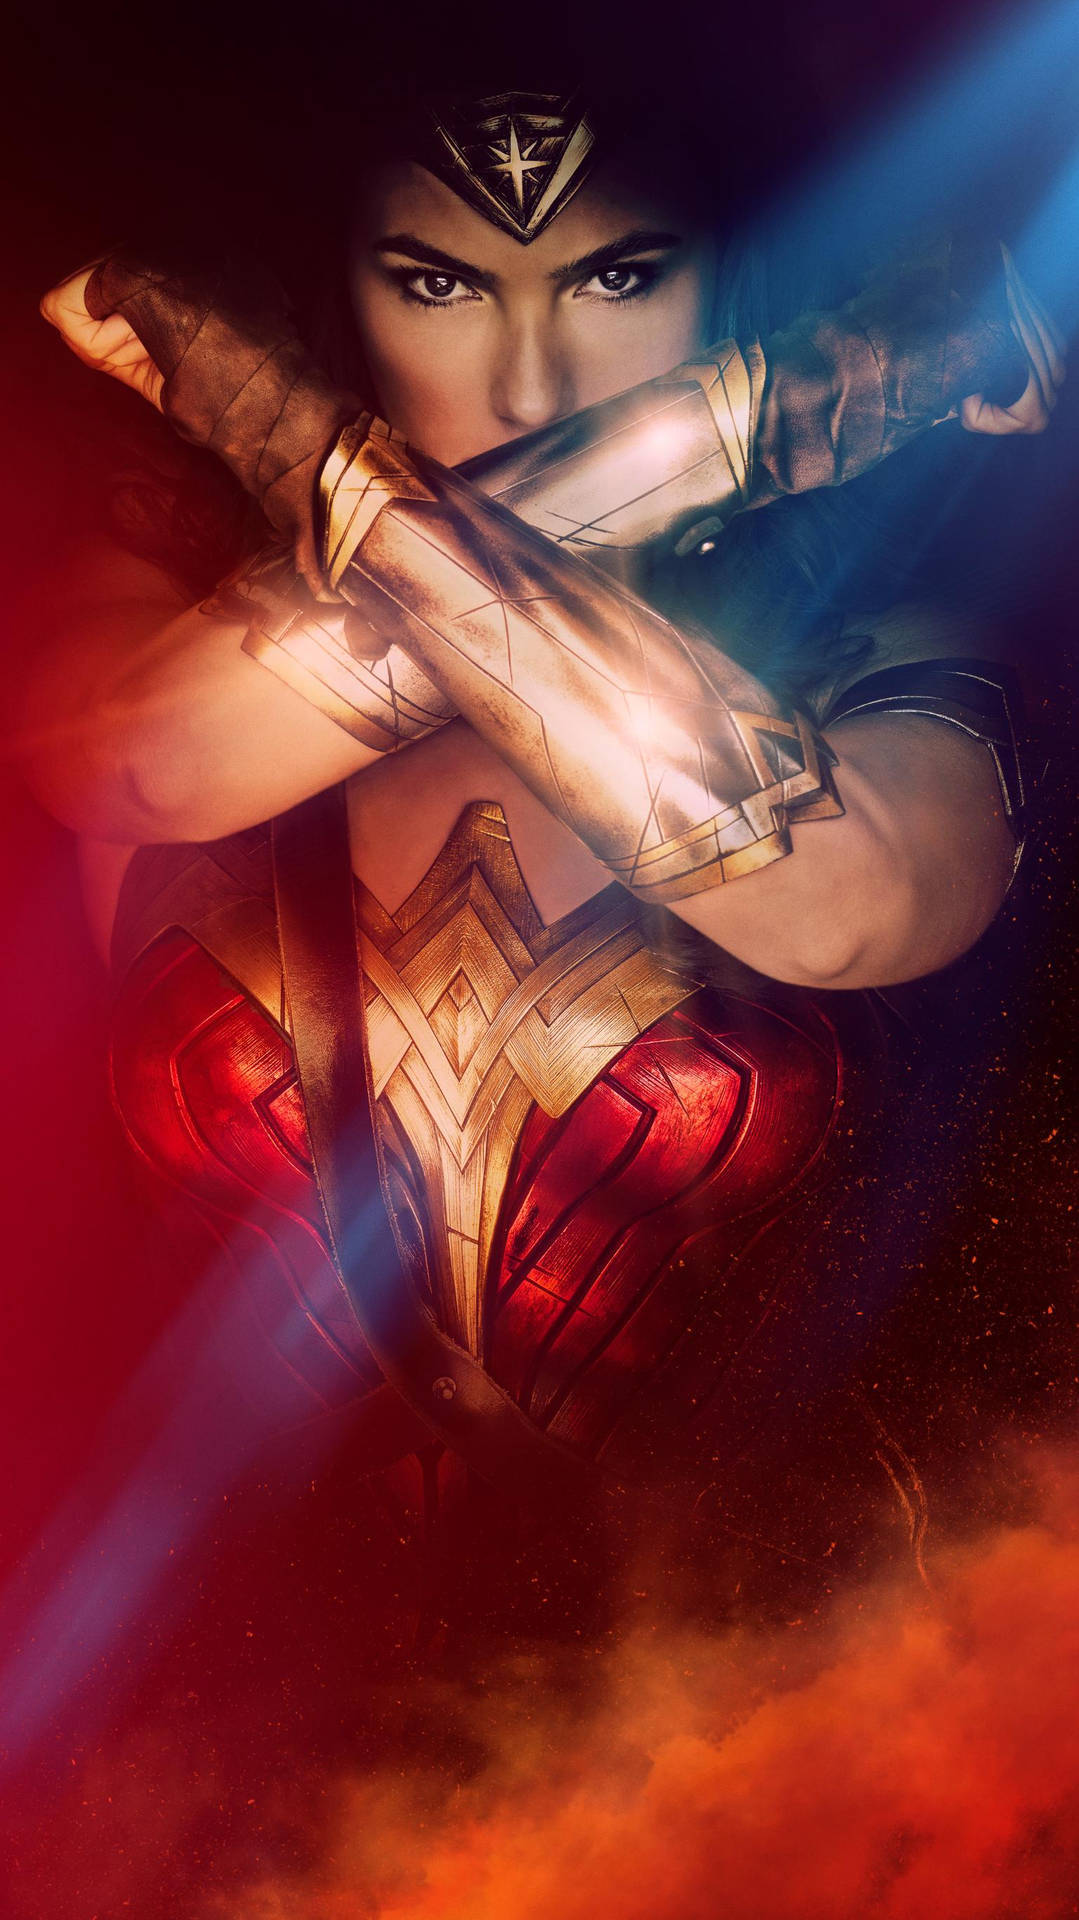 Red Smoky Wonder Woman Superhero Wallpaper